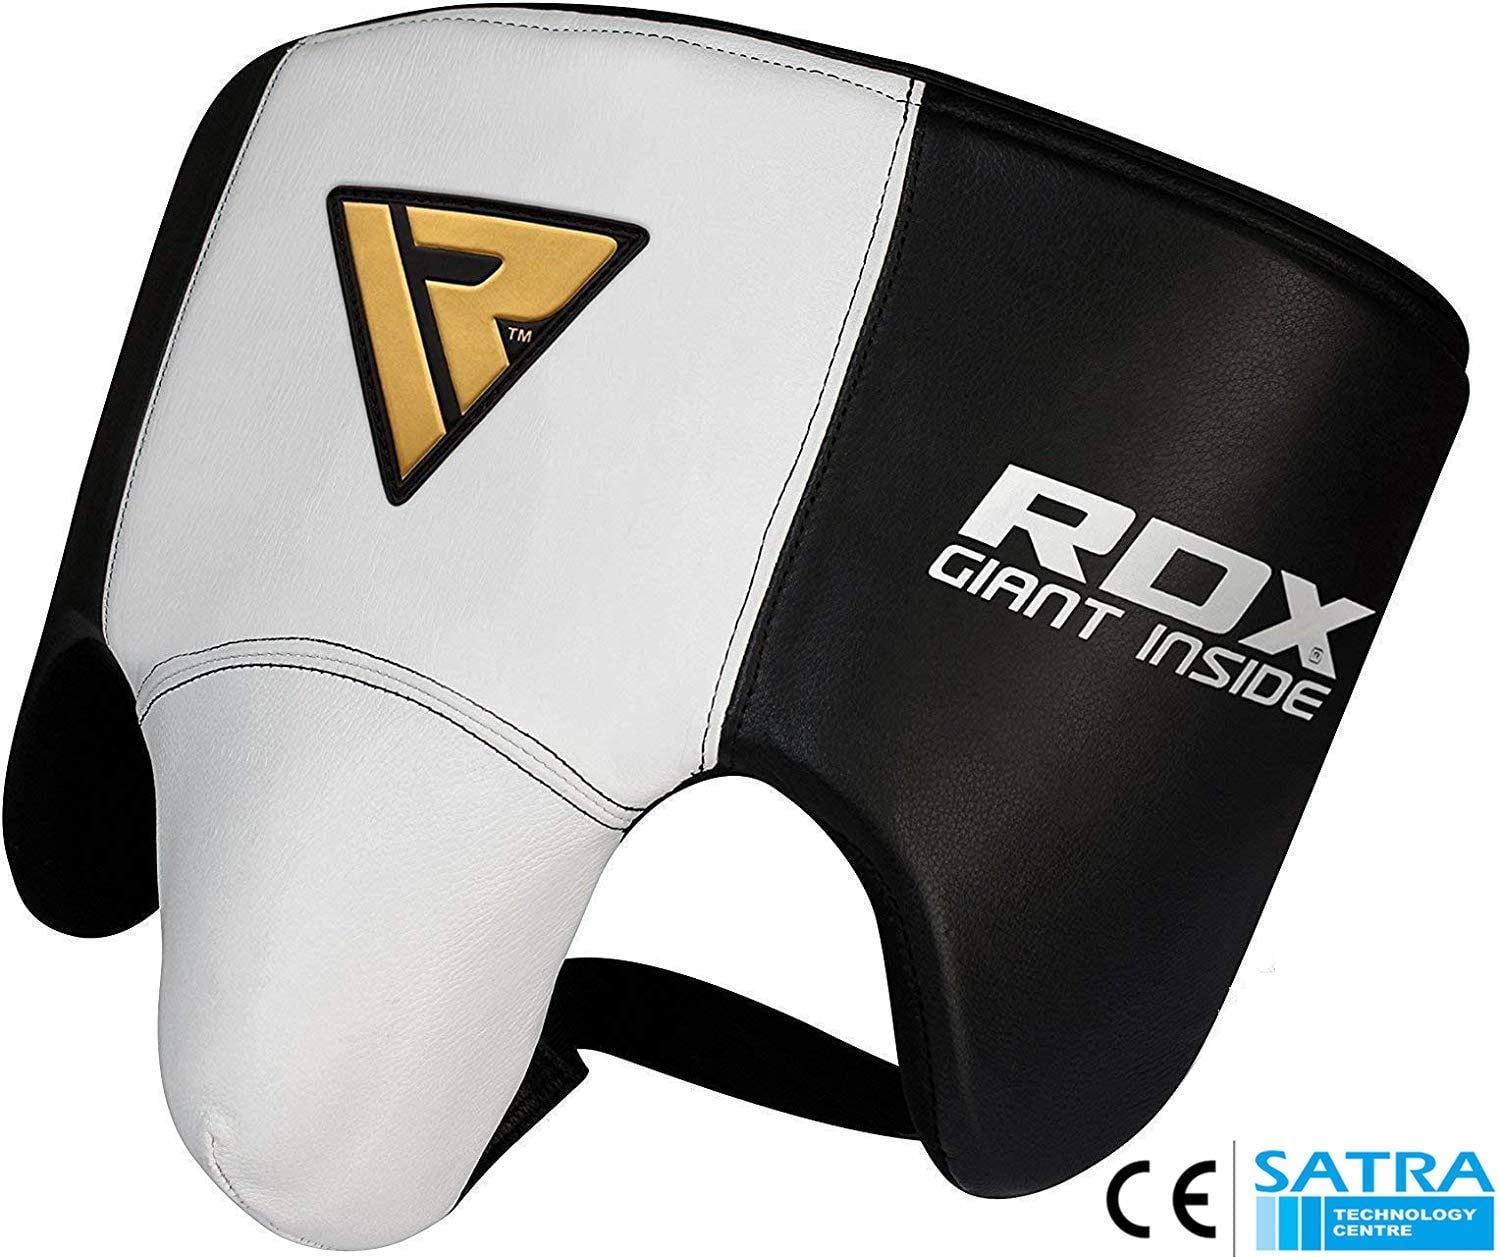 RDX Groin Guard Boxing Jock Strap MMA Abdominal Protector Muay Thai Abdo Gear CA 